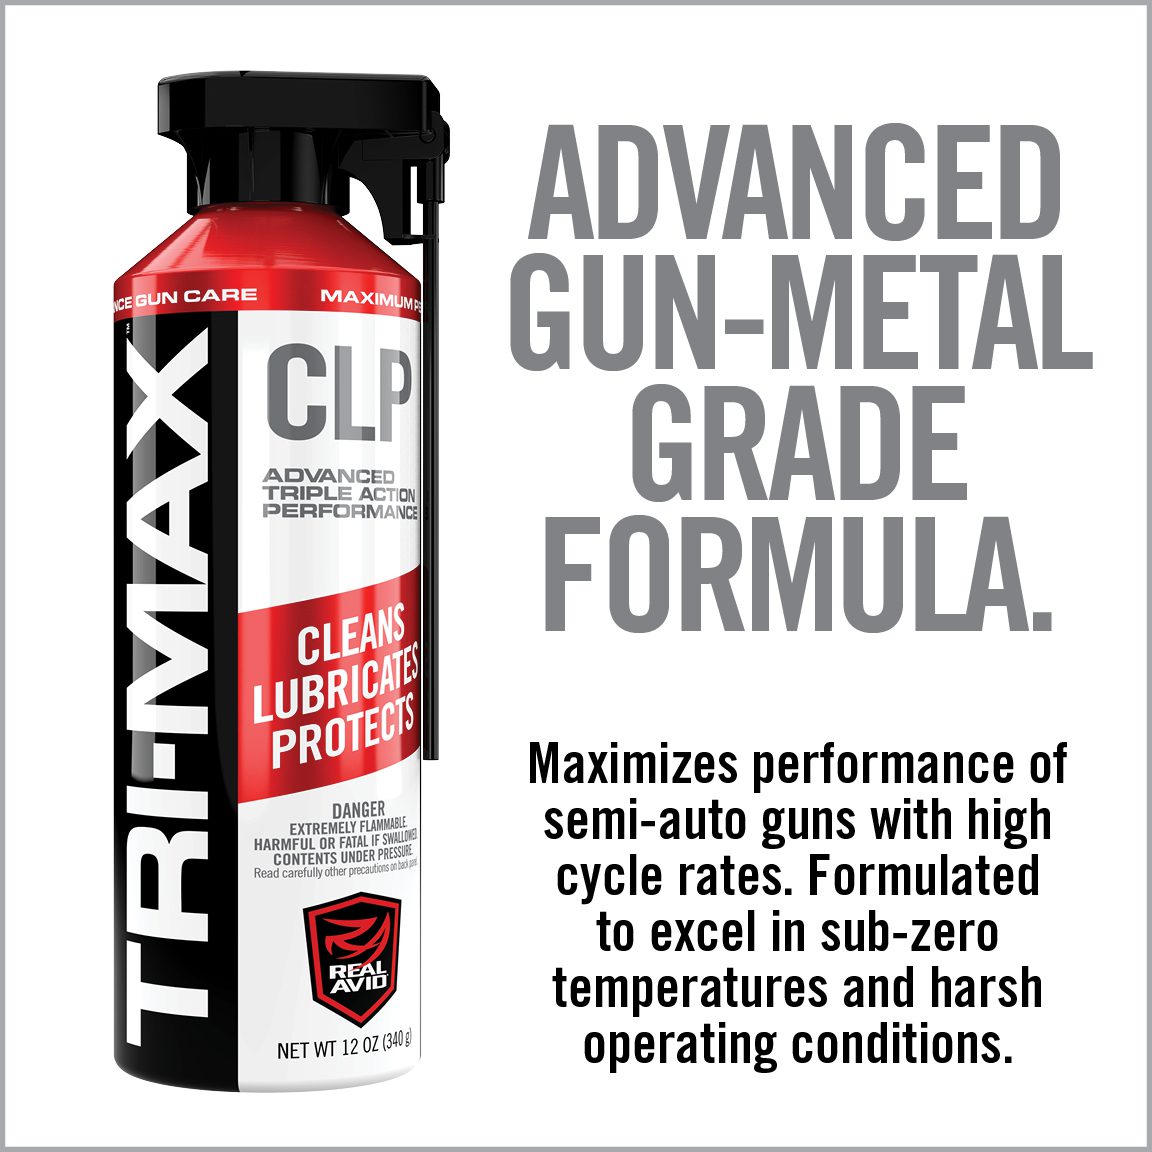 an ad for a gun metal grade formula